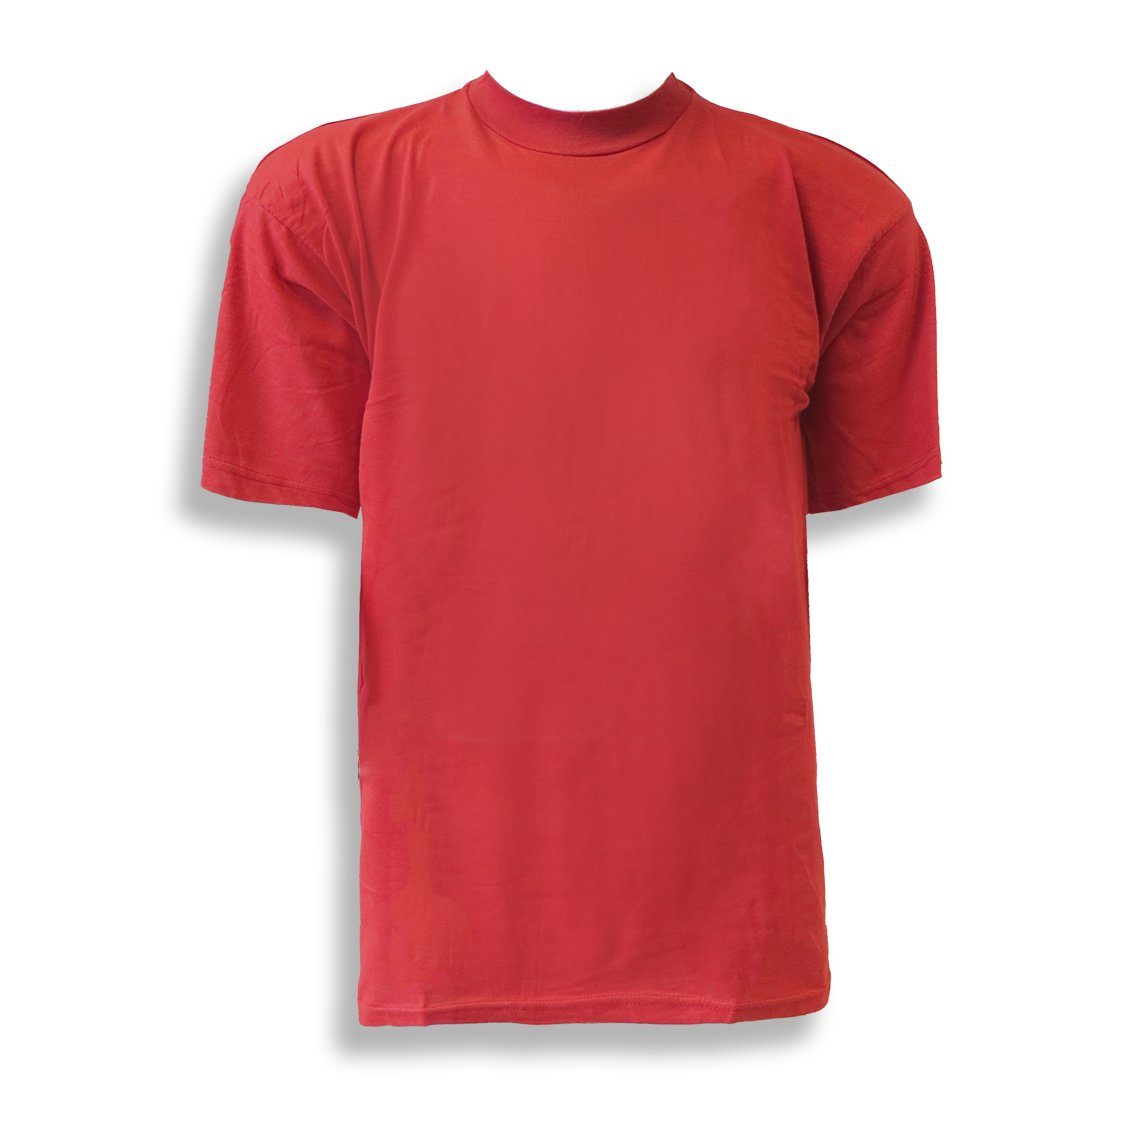 Sonia Originelli T-Shirt "Uni" T-Shirt Herren rot Baumwolle Basic Einfarbig